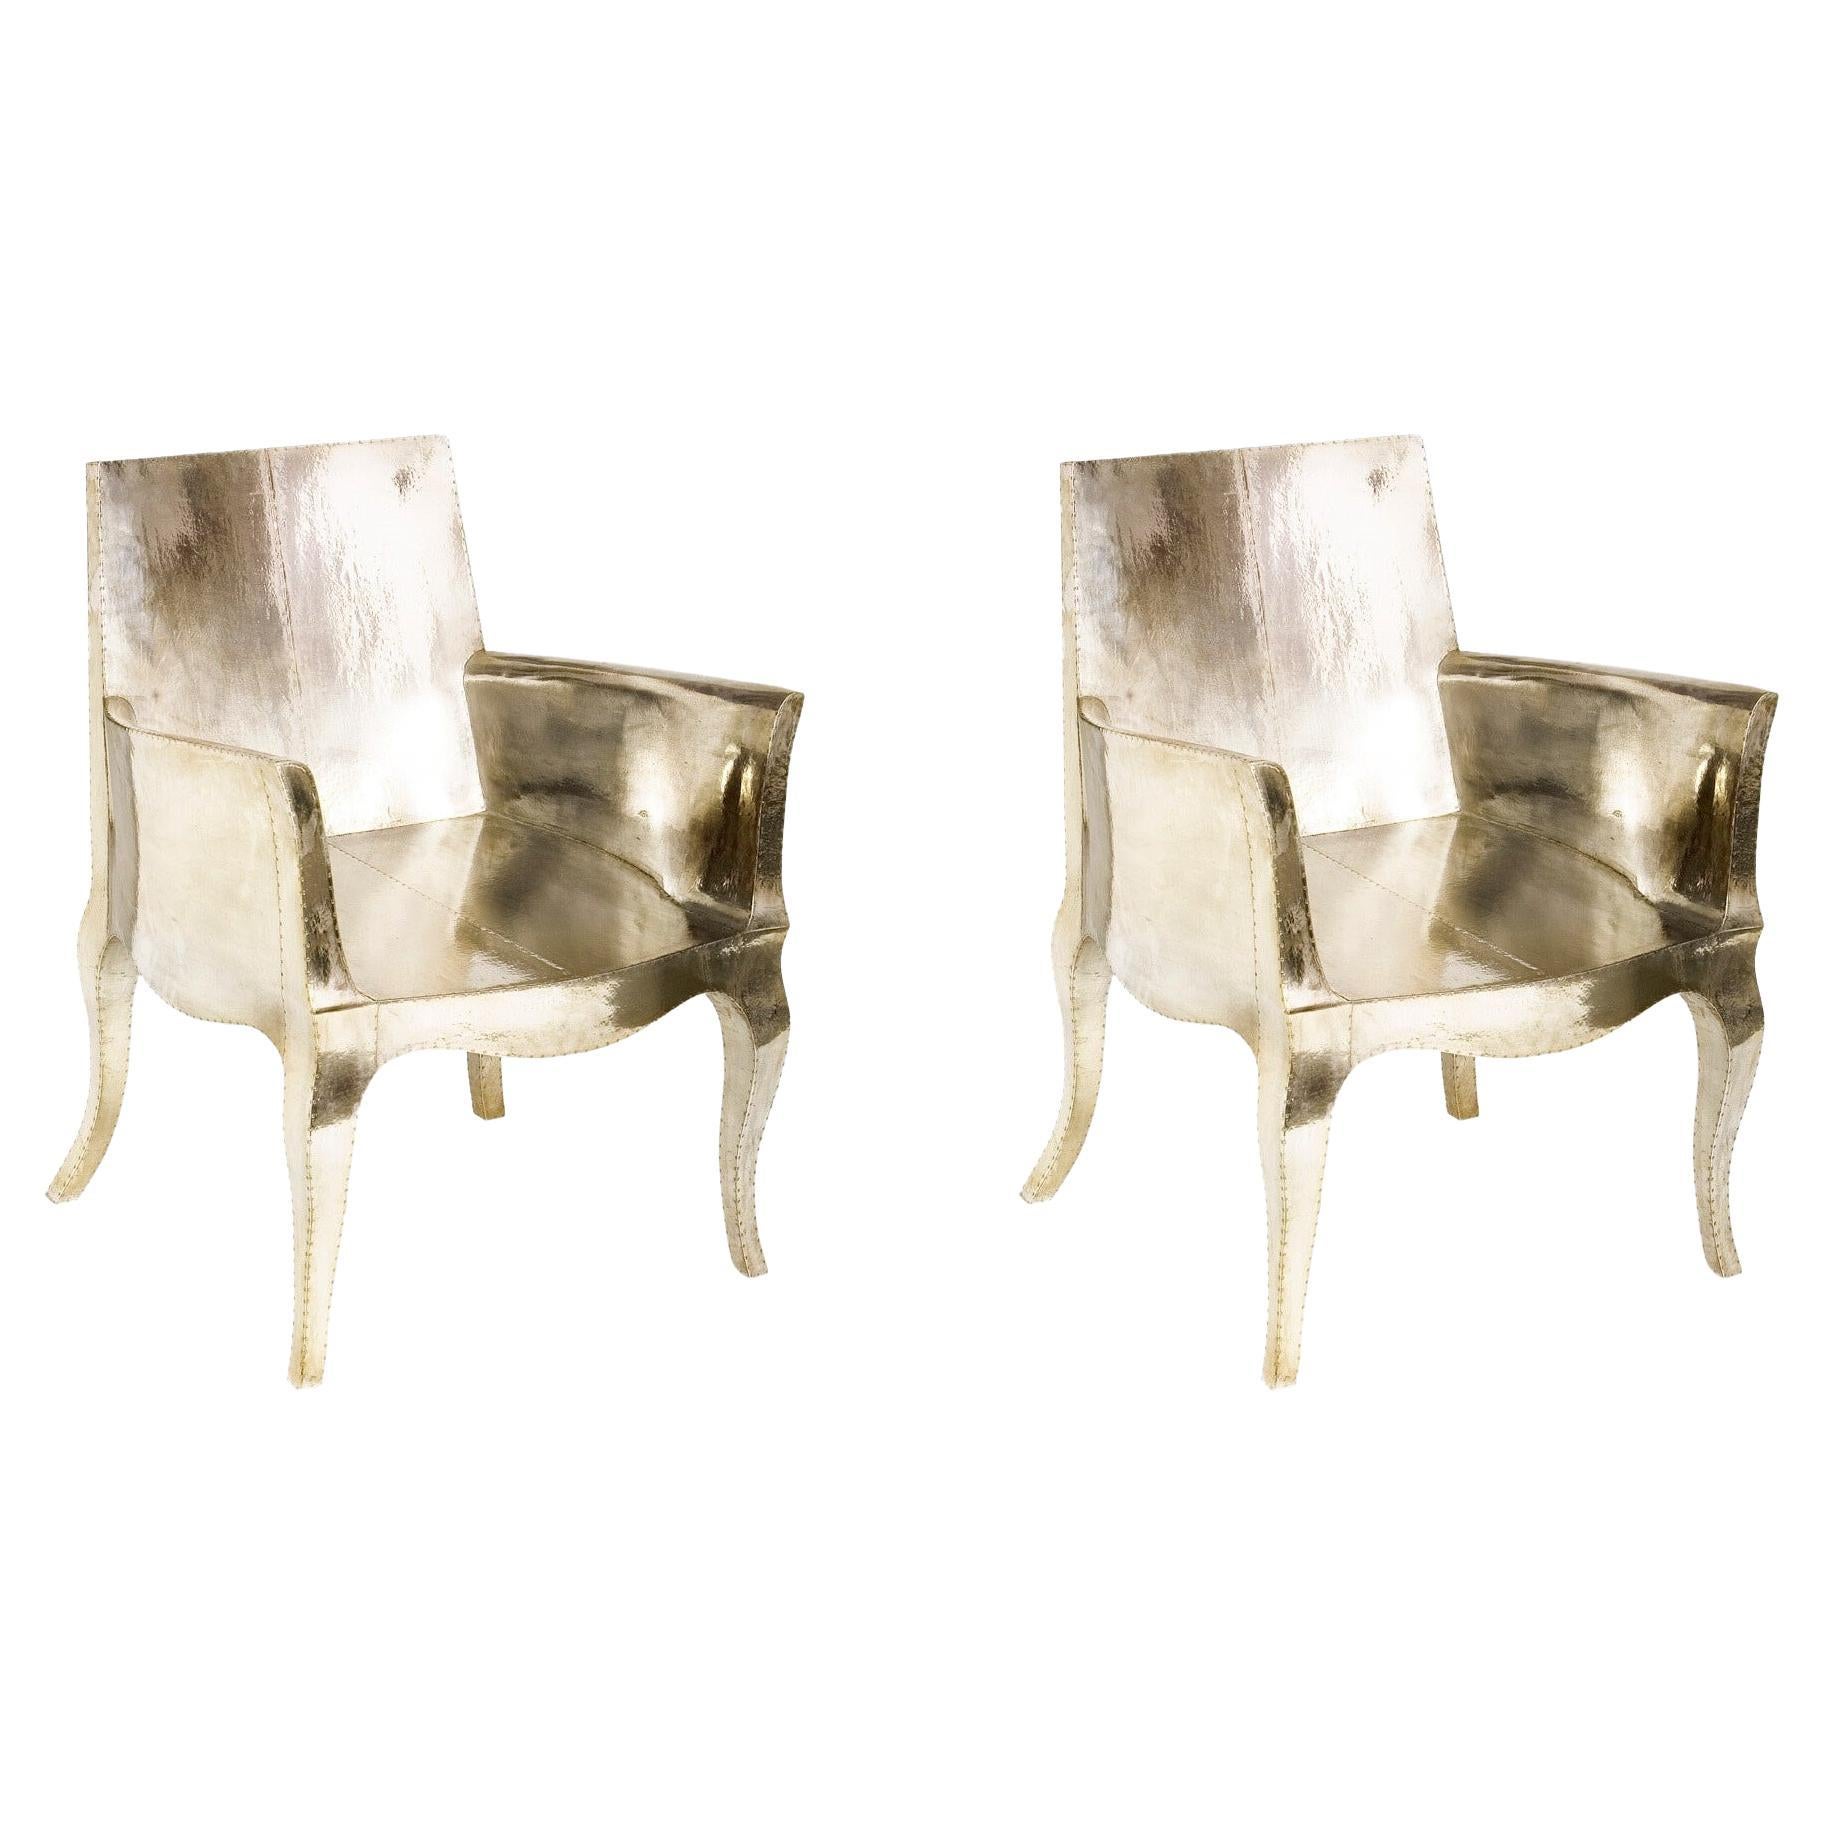 Art Deco Desk Chair Pair Designed by Paul Mathieu for Stephanie Odegard